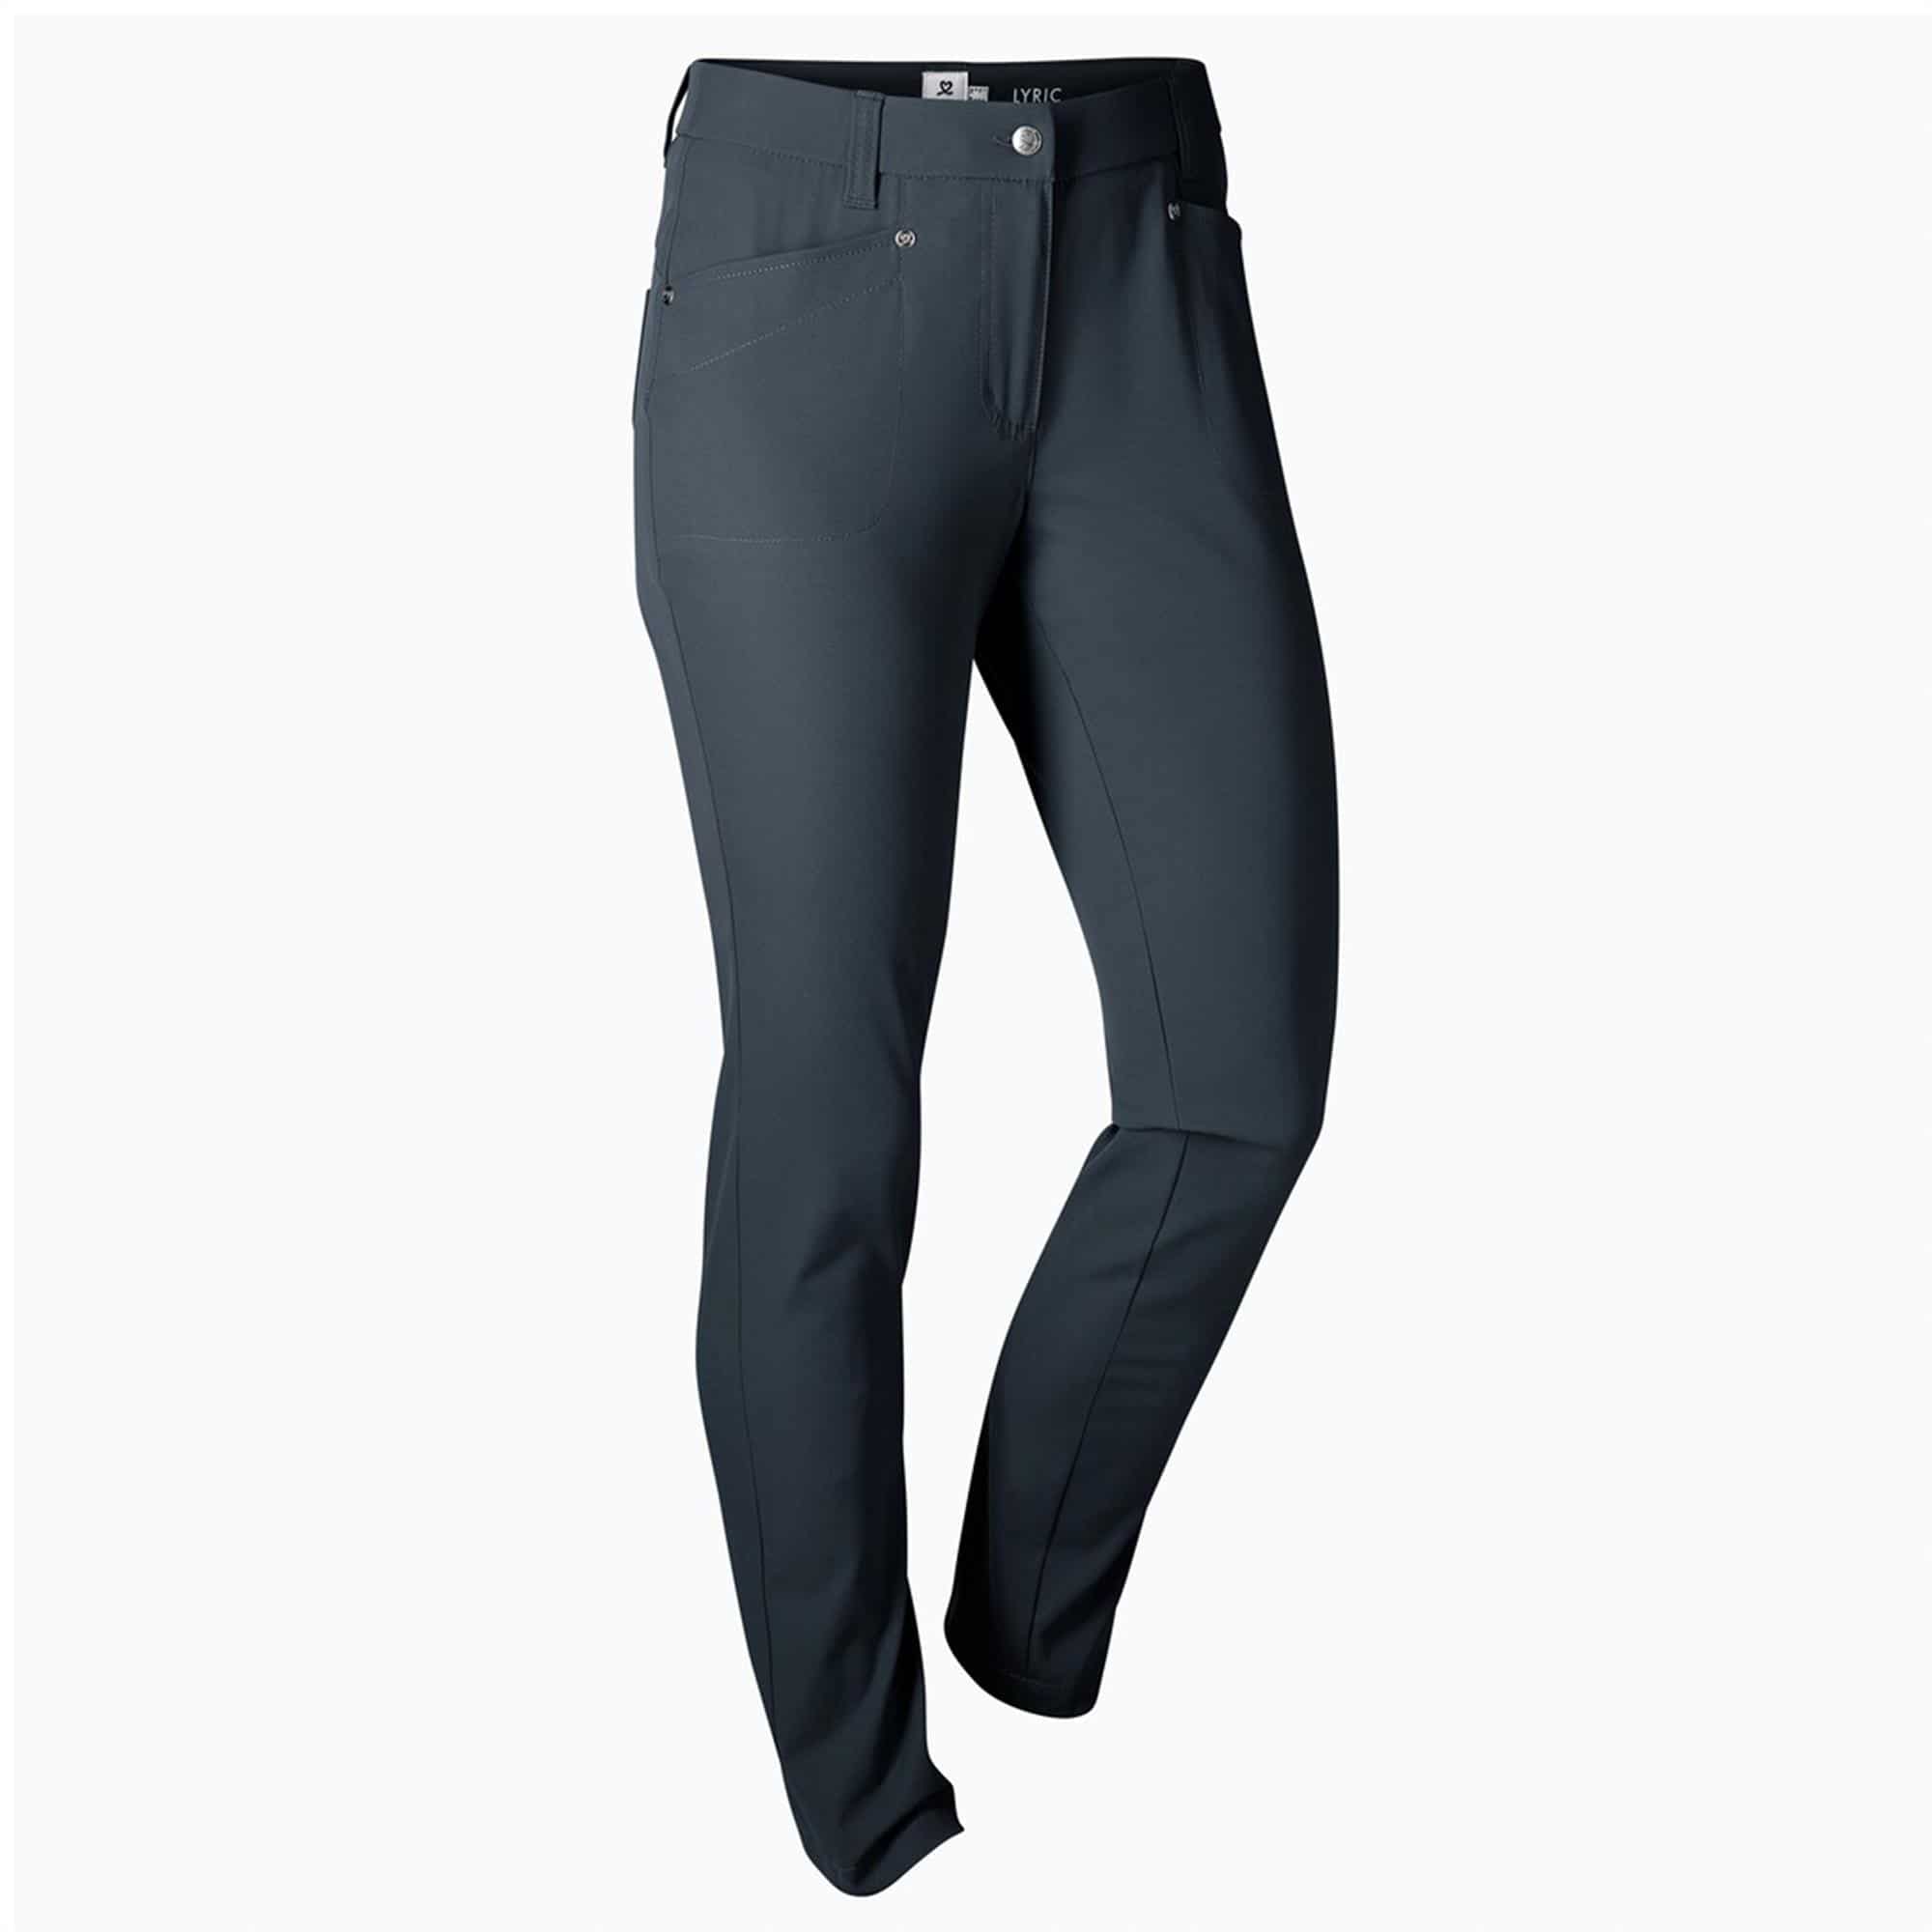 Röhnisch Chie Comfort Pants 30 - Trousers Ladies